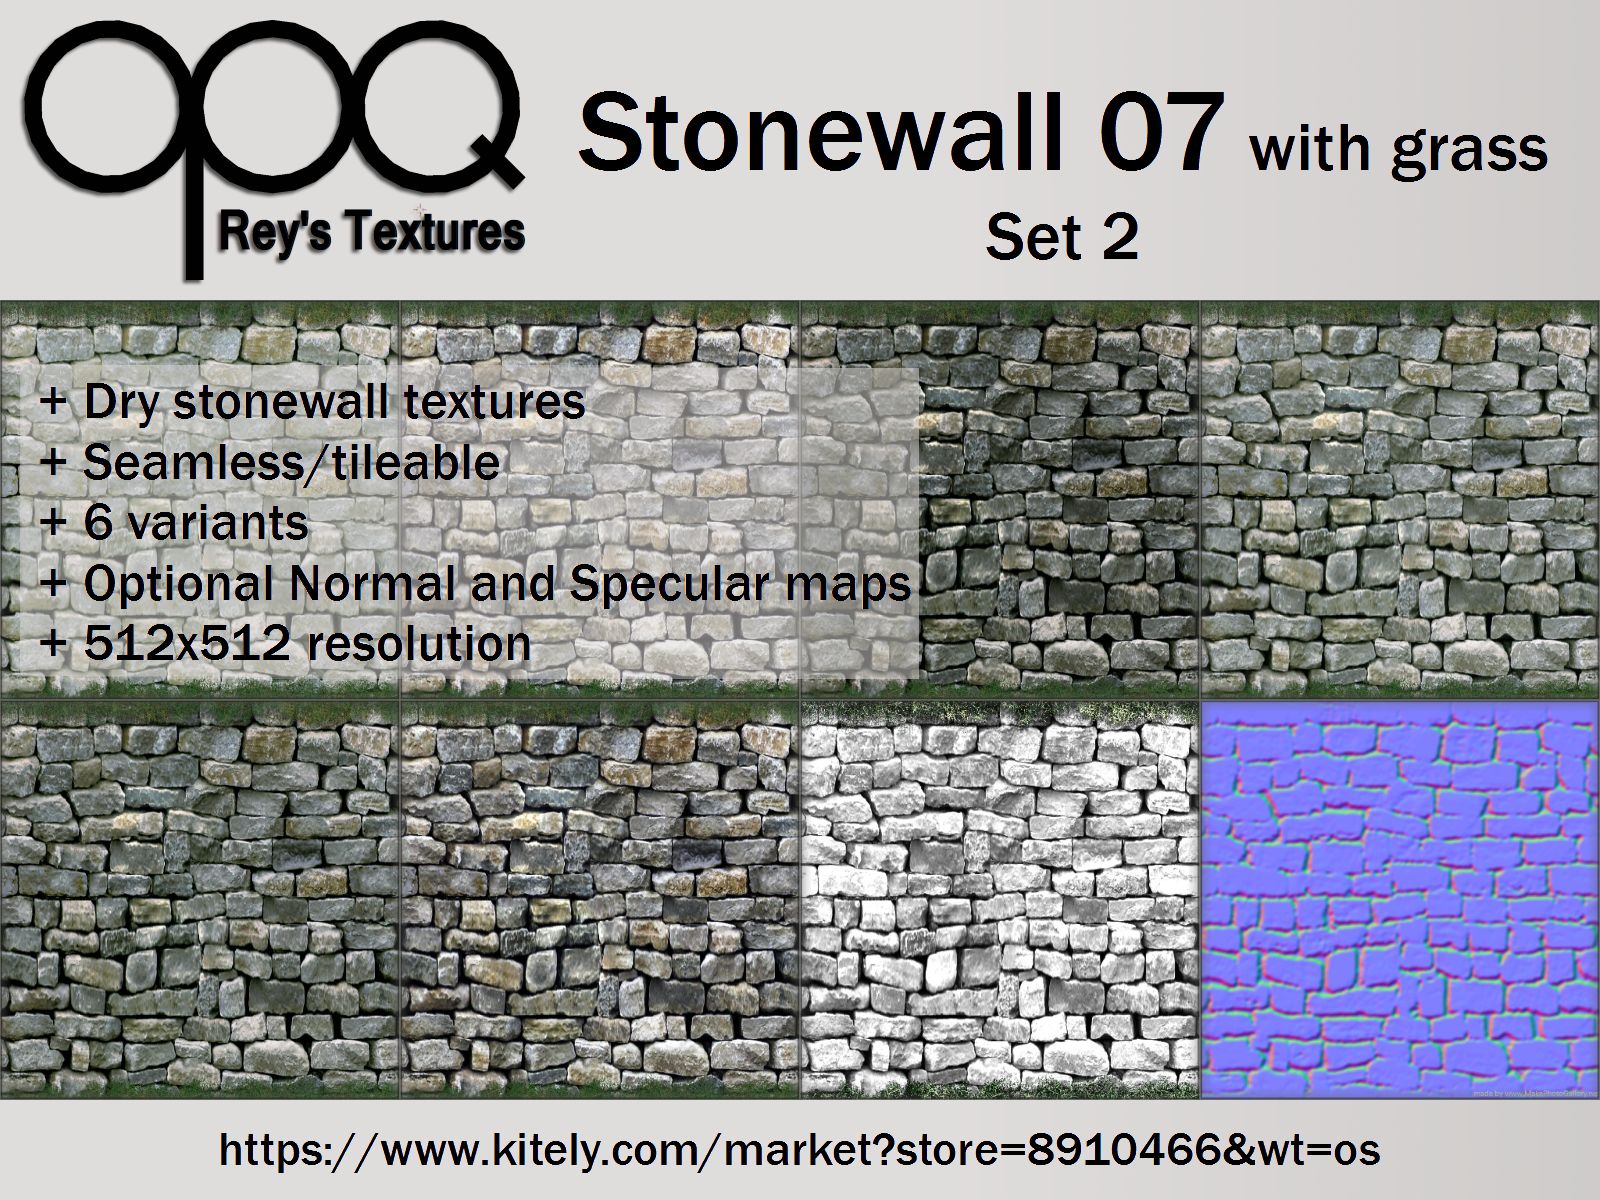 Rey's Stonewall 07 with Grass Set 1 Poster Kitely.jpg